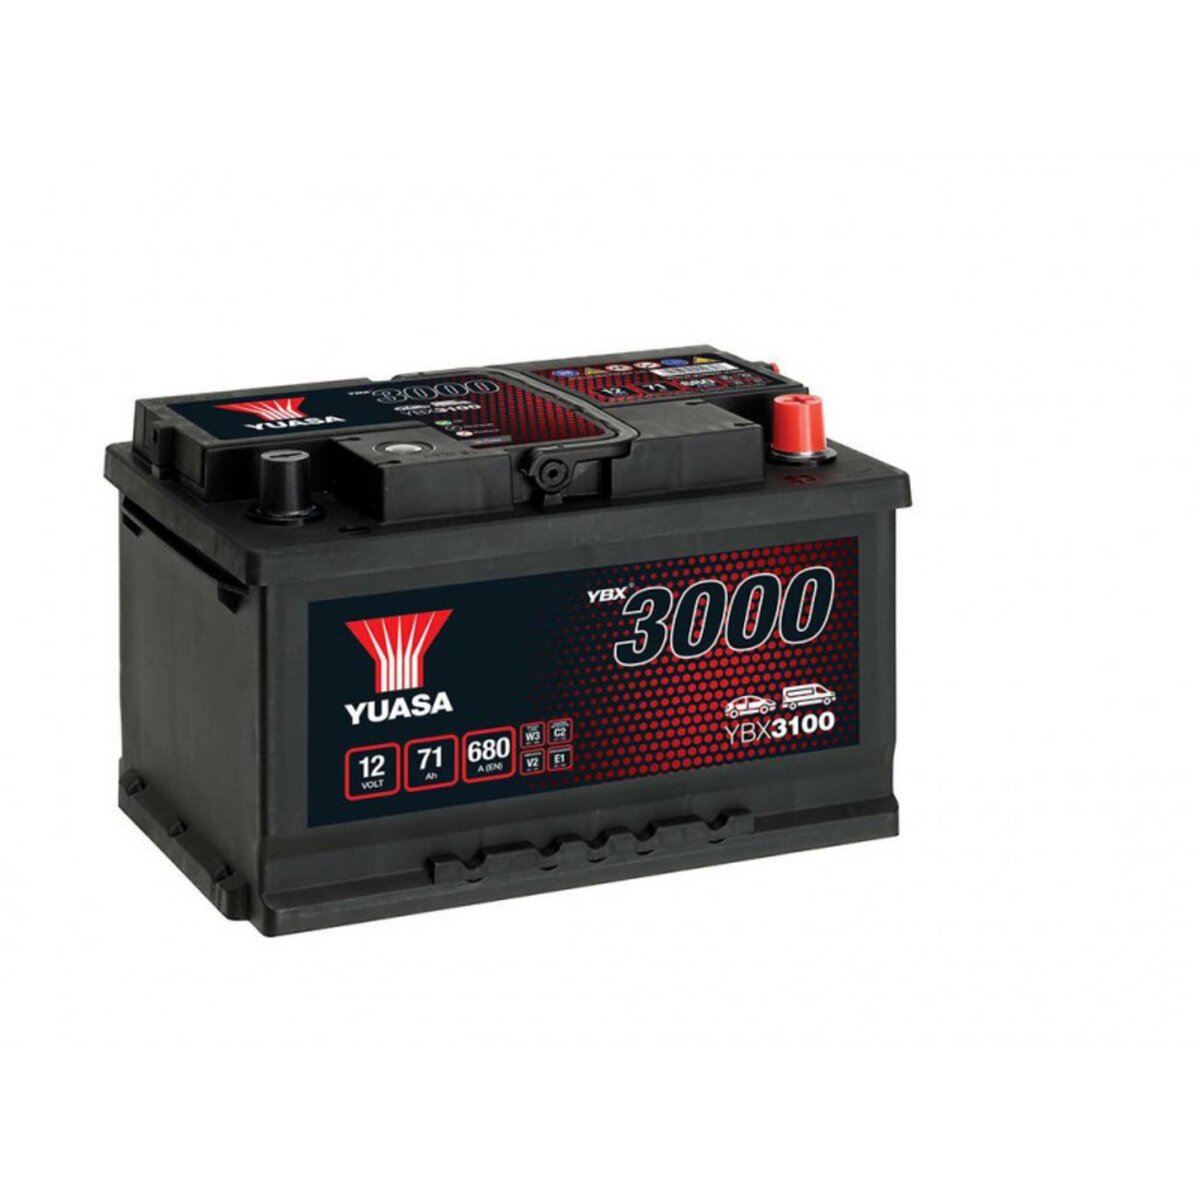 YUASA Batterie Yuasa SMF YBX3100 12V 71ah 650A pas cher 